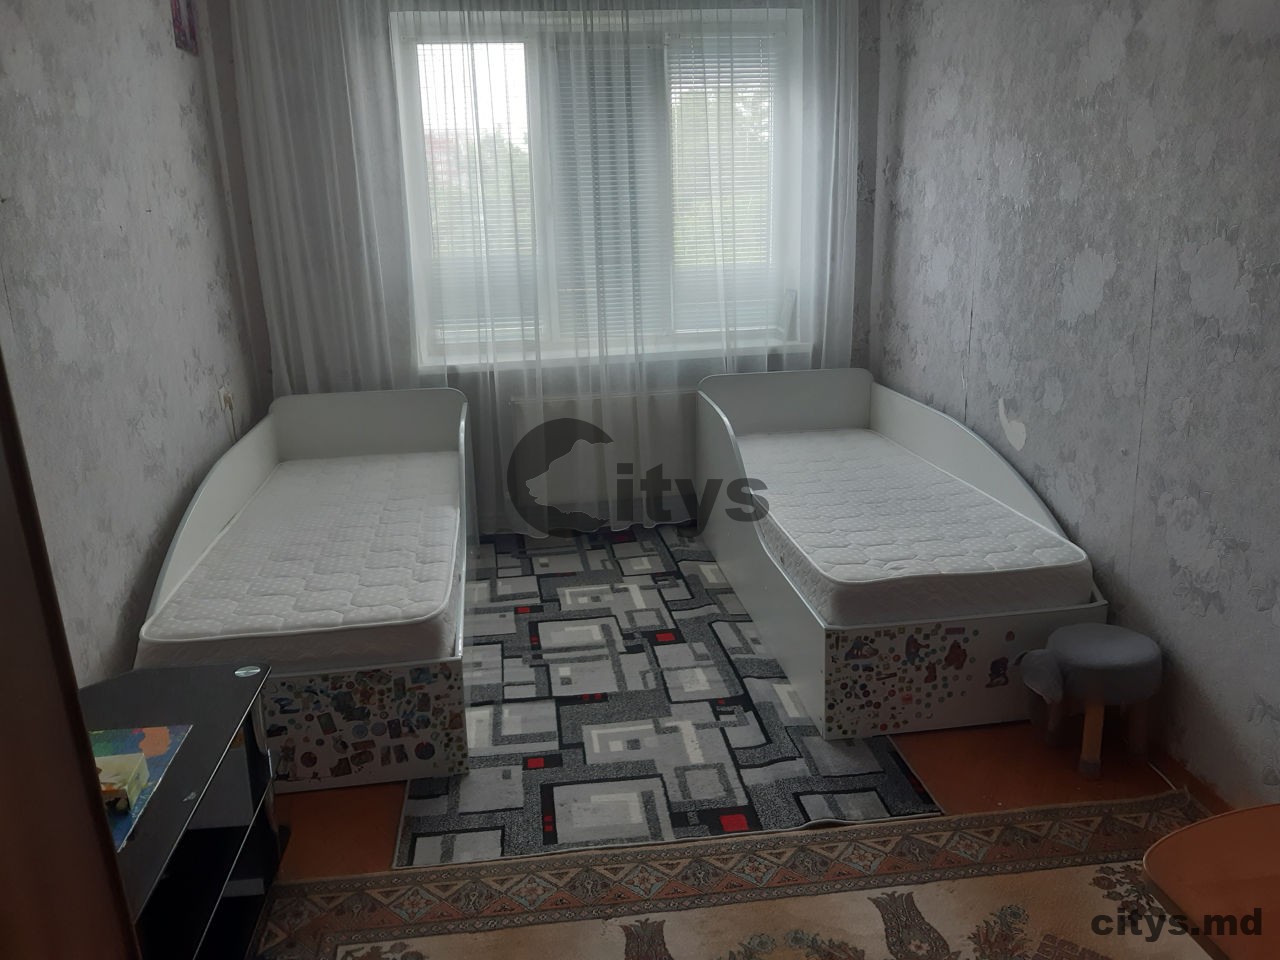 2-х комнатная квартира, 60м², Chișinău, Poșta Veche, str-la Studenților photo 1